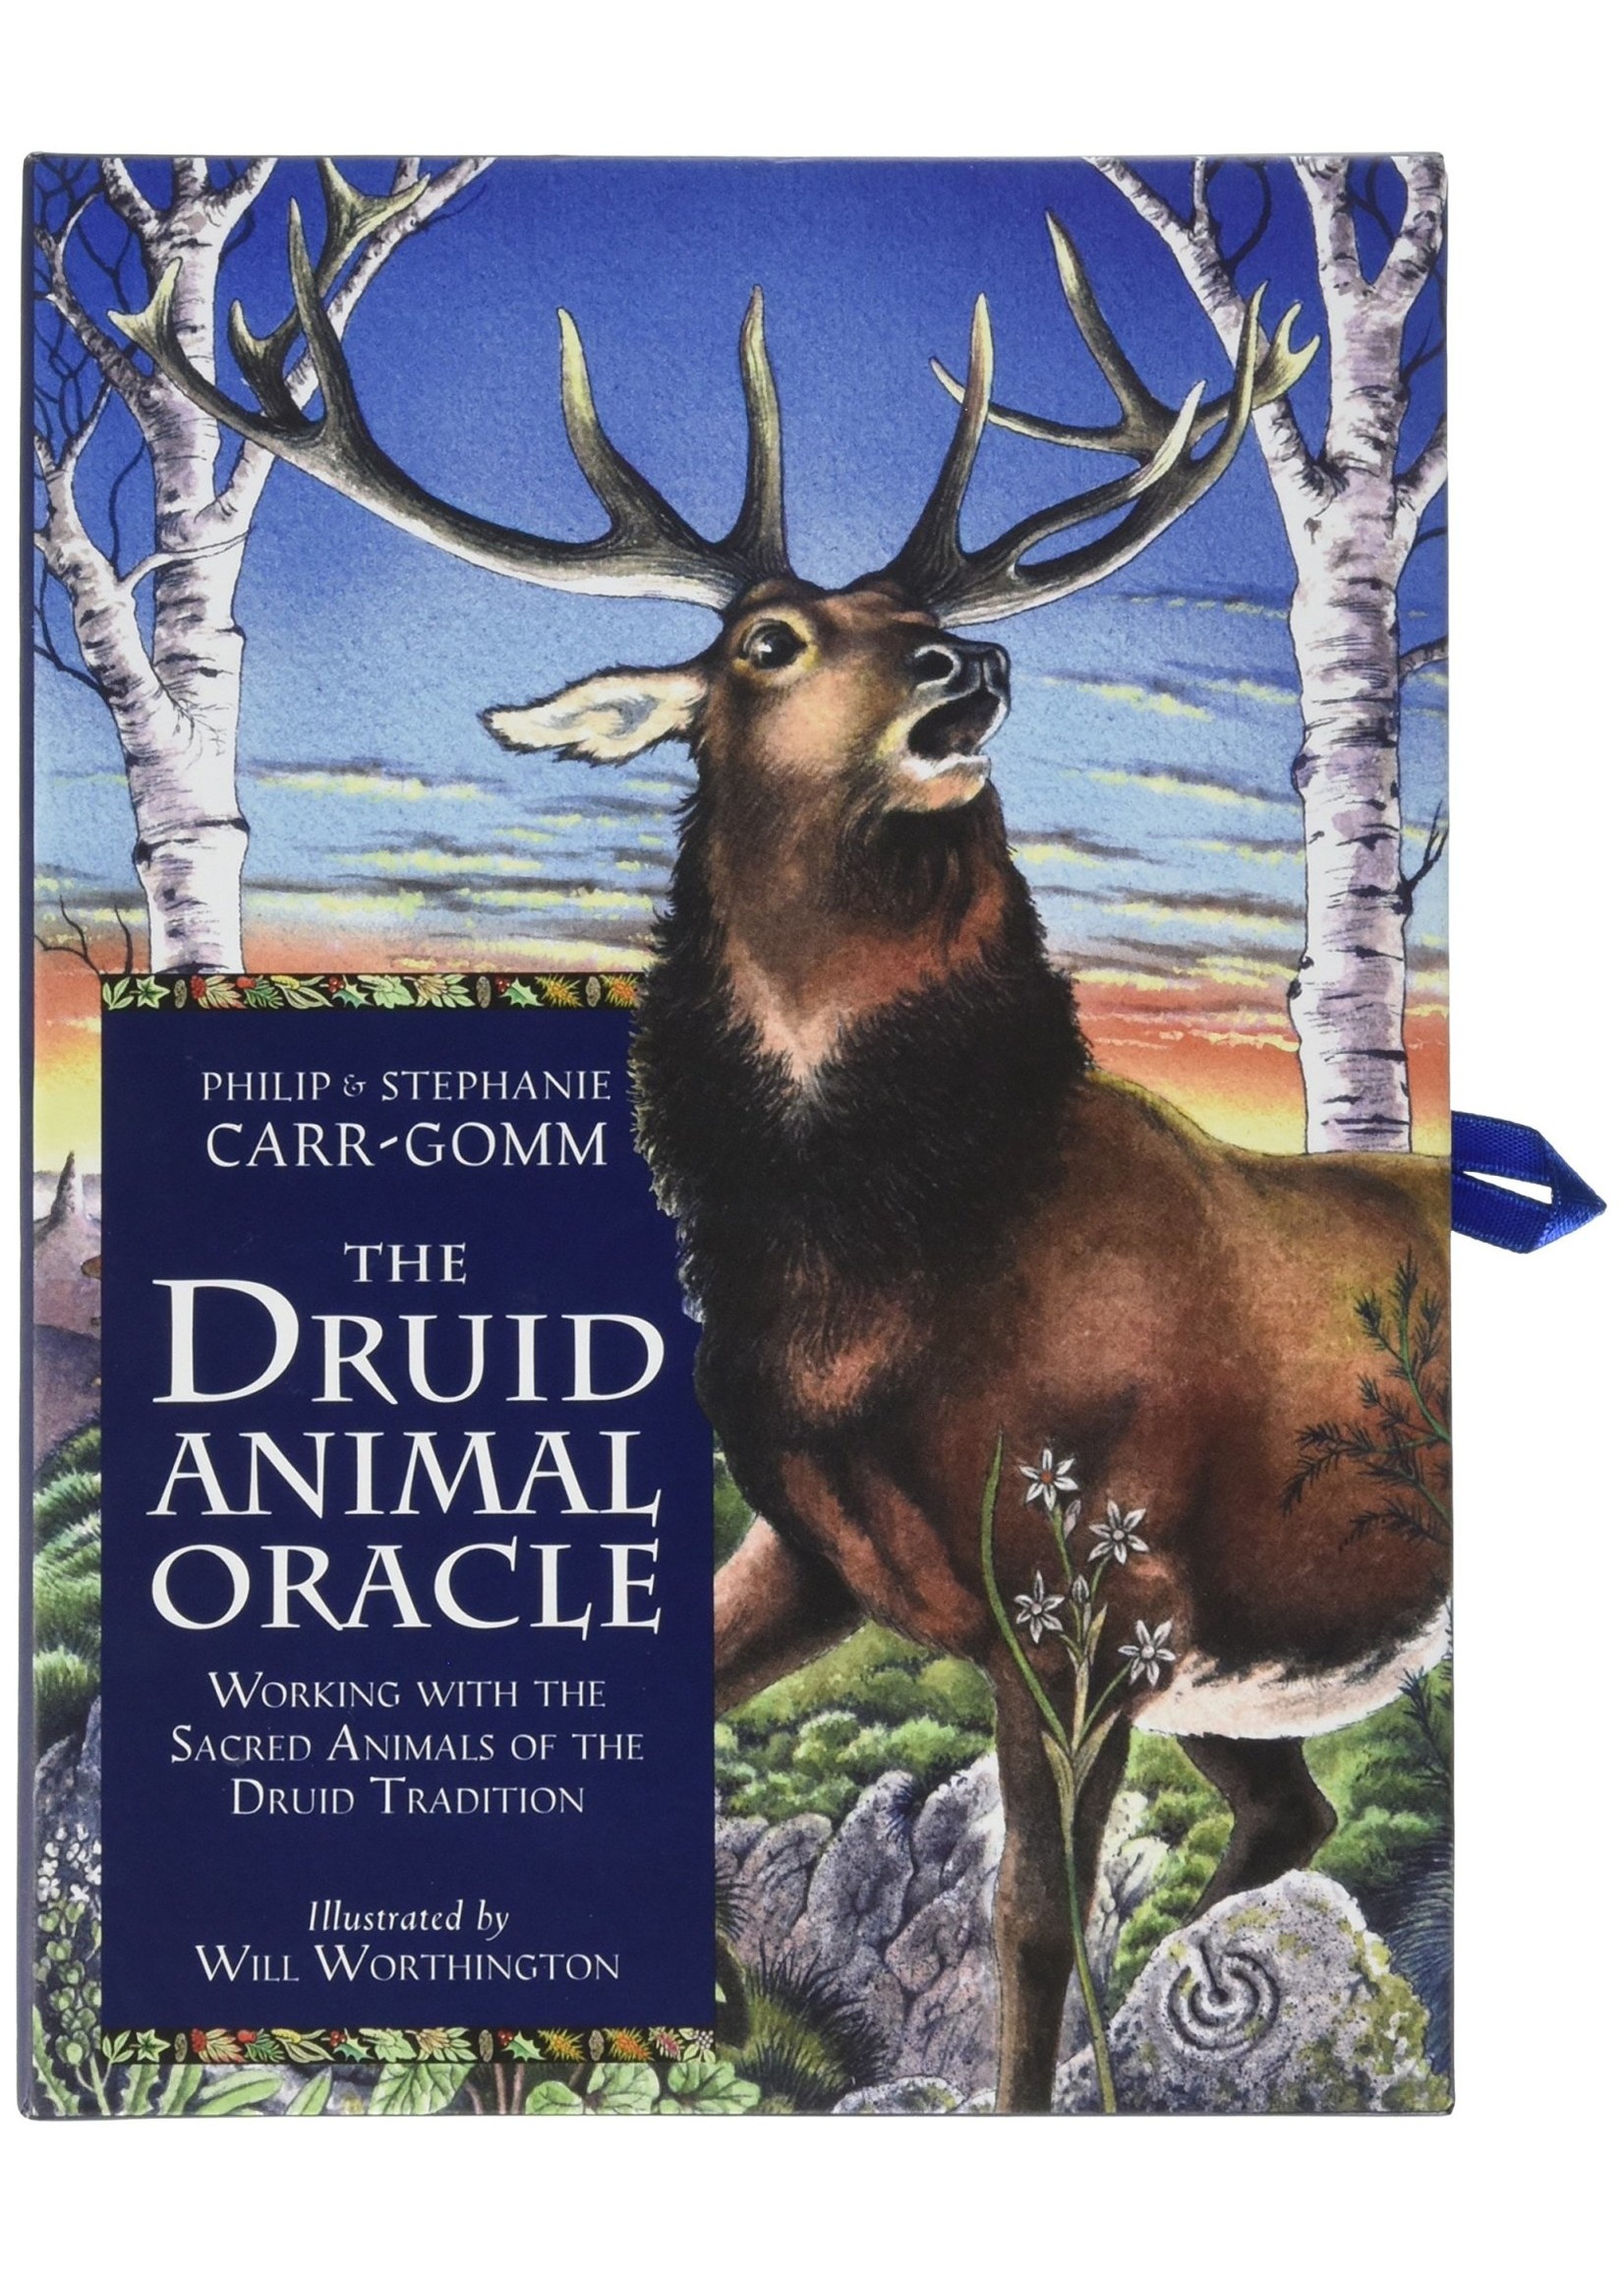 The Druid Animal Oracle by Philip Carr-Gomm, Bill Worthington, Stephanie Carr-Gomm